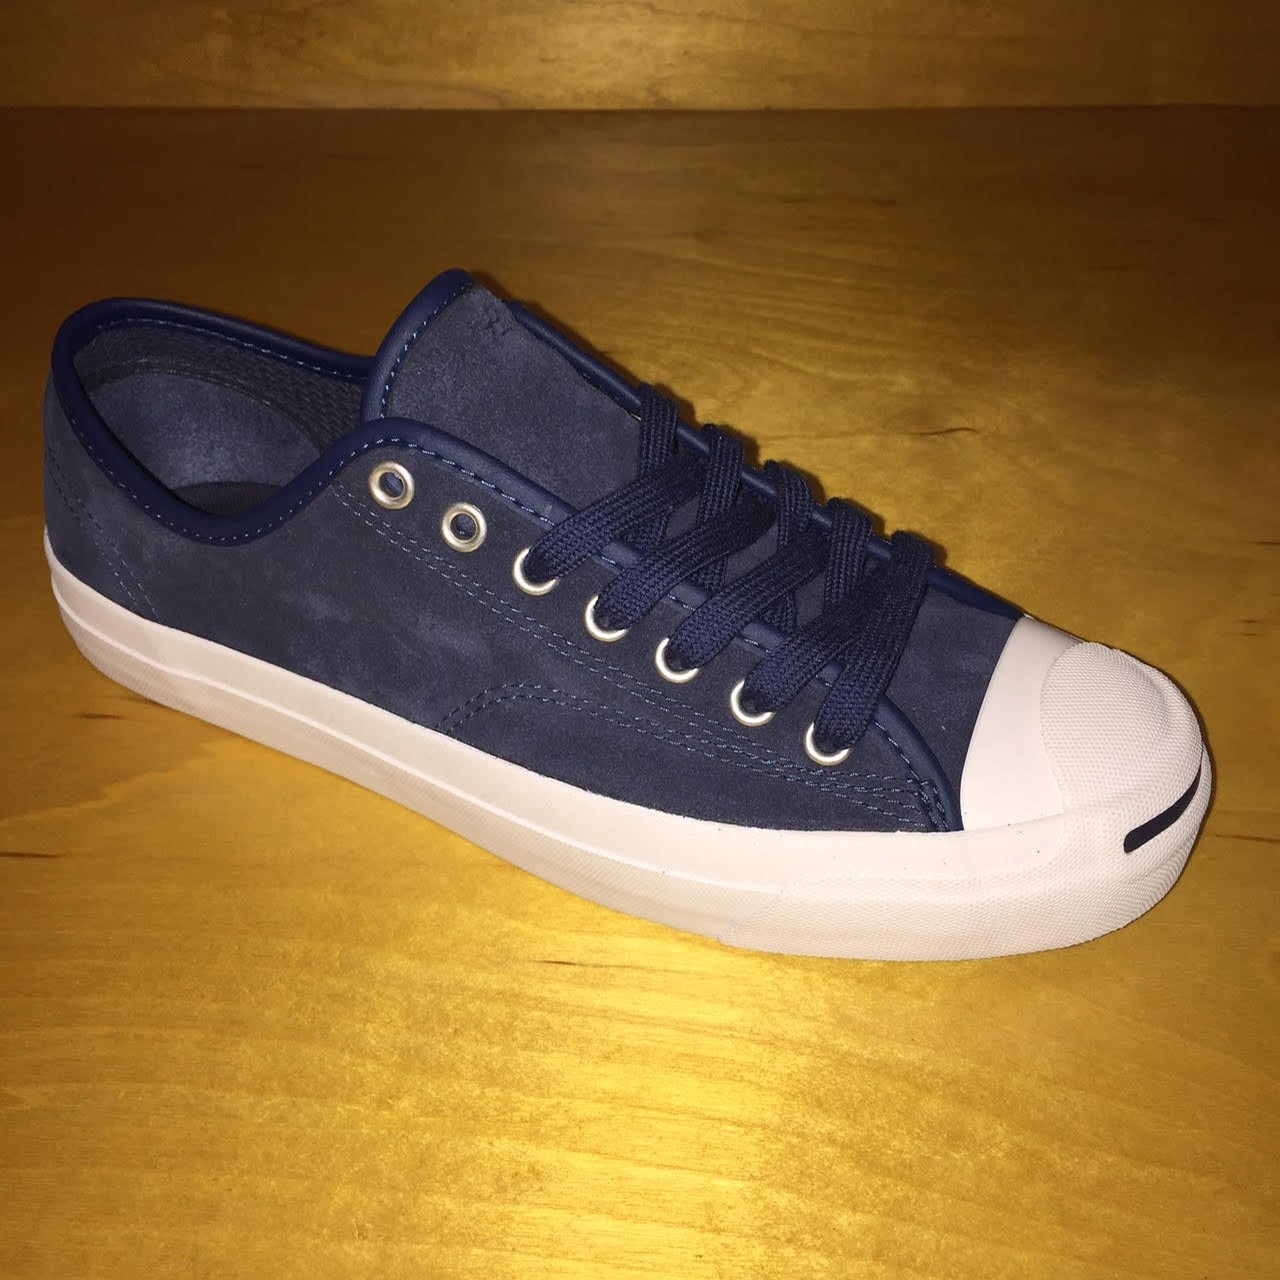 Converse JP Pro Ox Navy / White Footwear Adult at Westside Tarpon